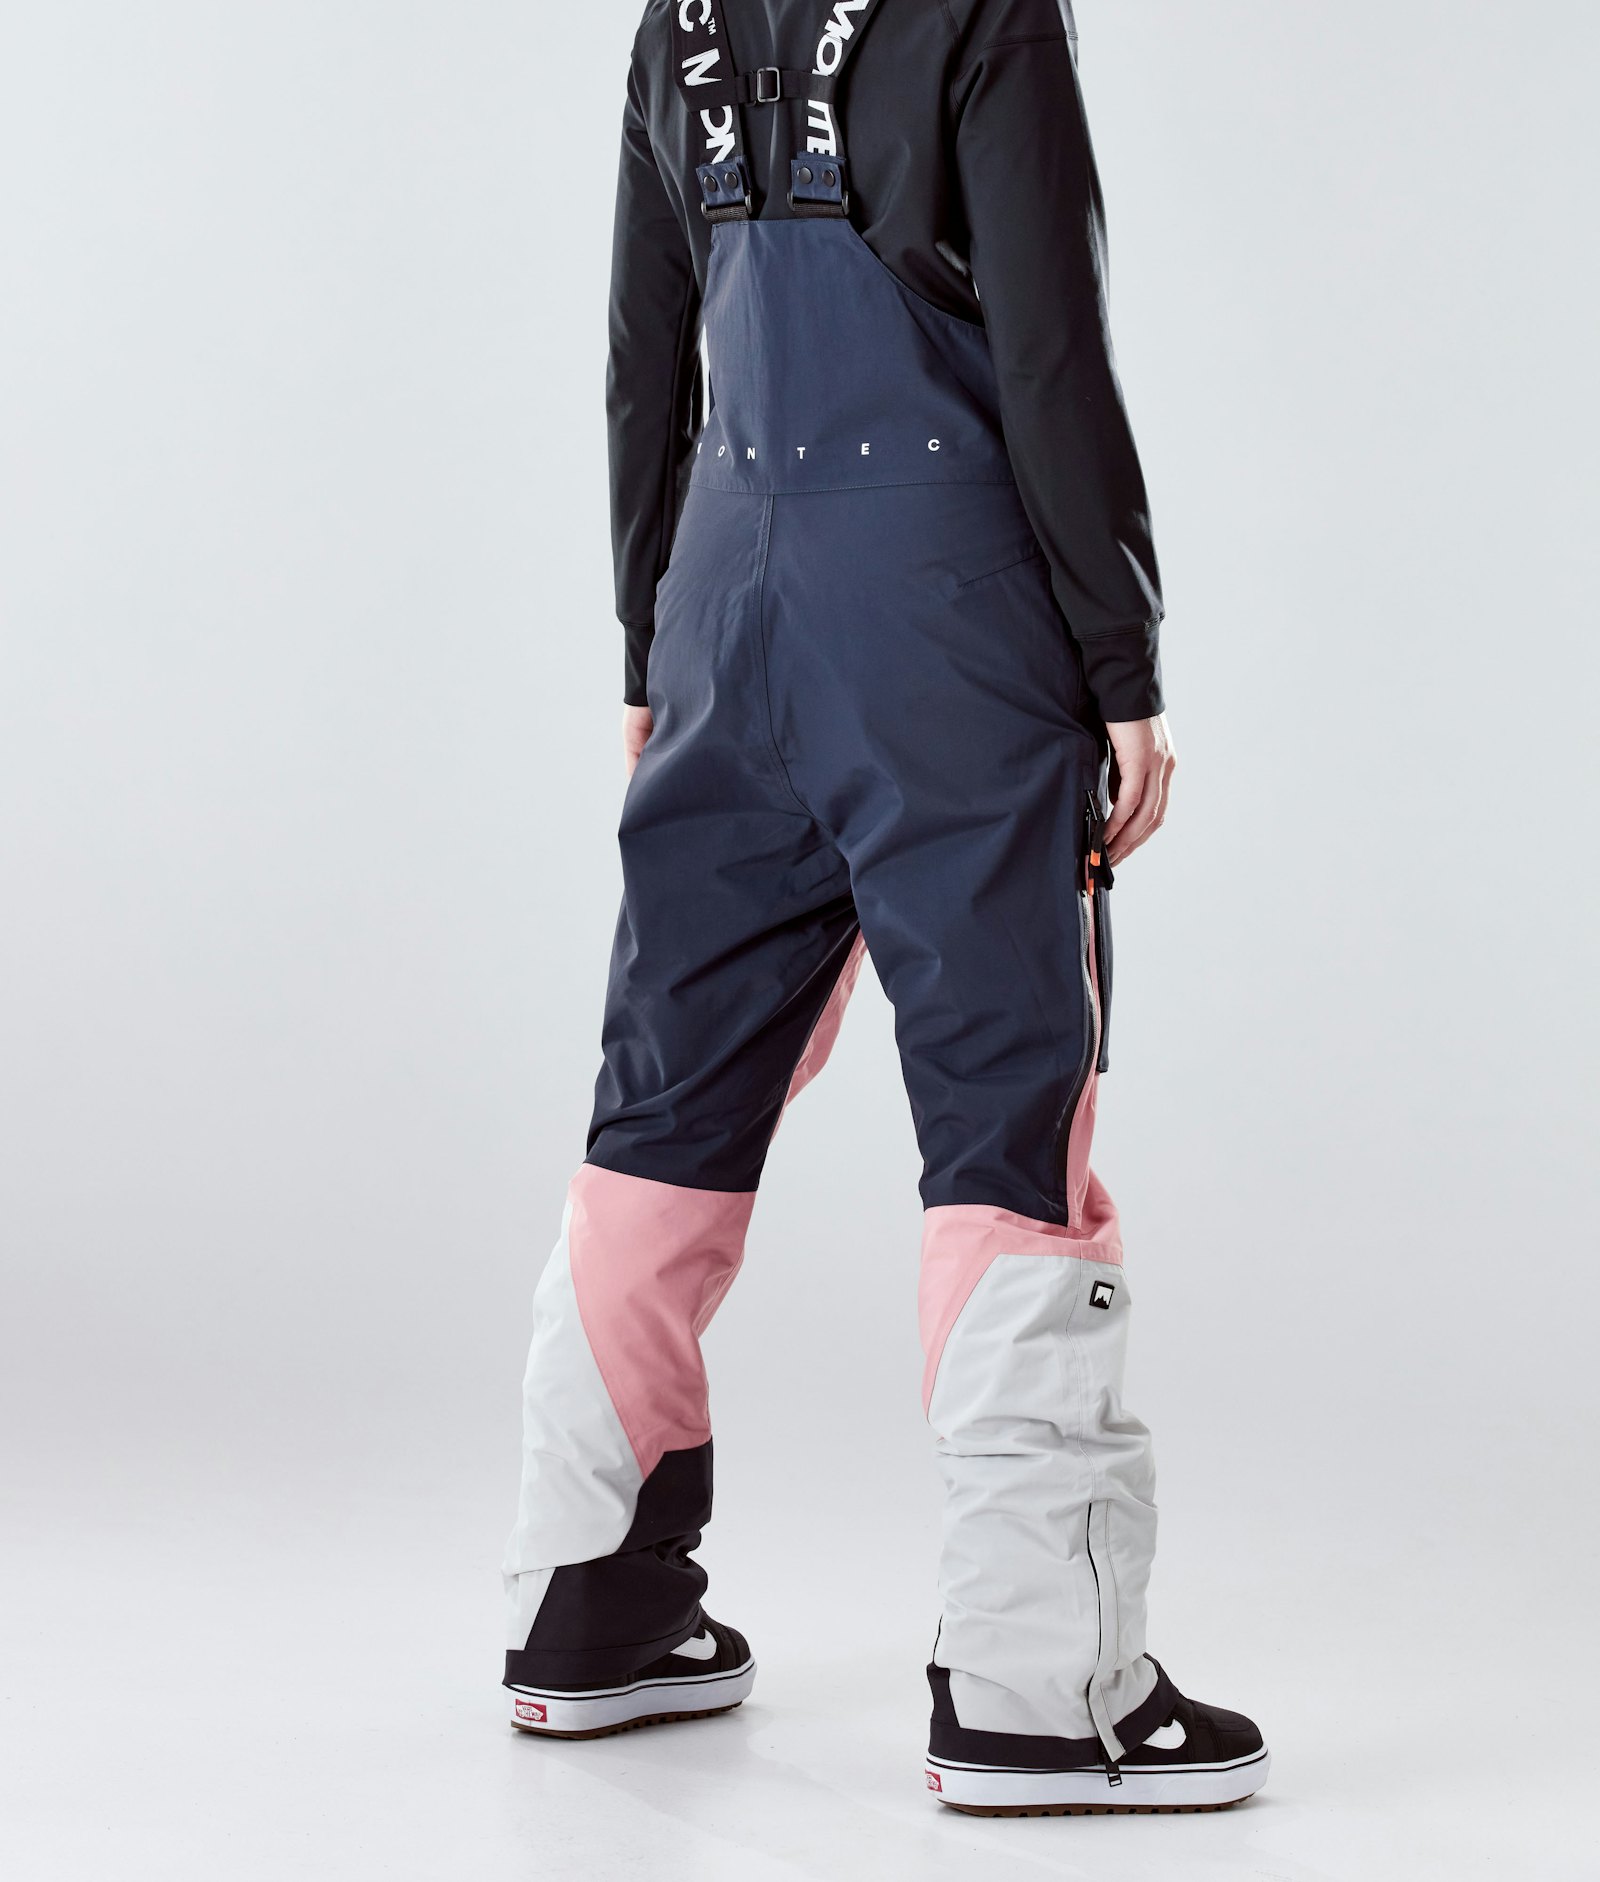 Fawk W 2020 Pantaloni Snowboard Donna Marine/Pink/Light Grey